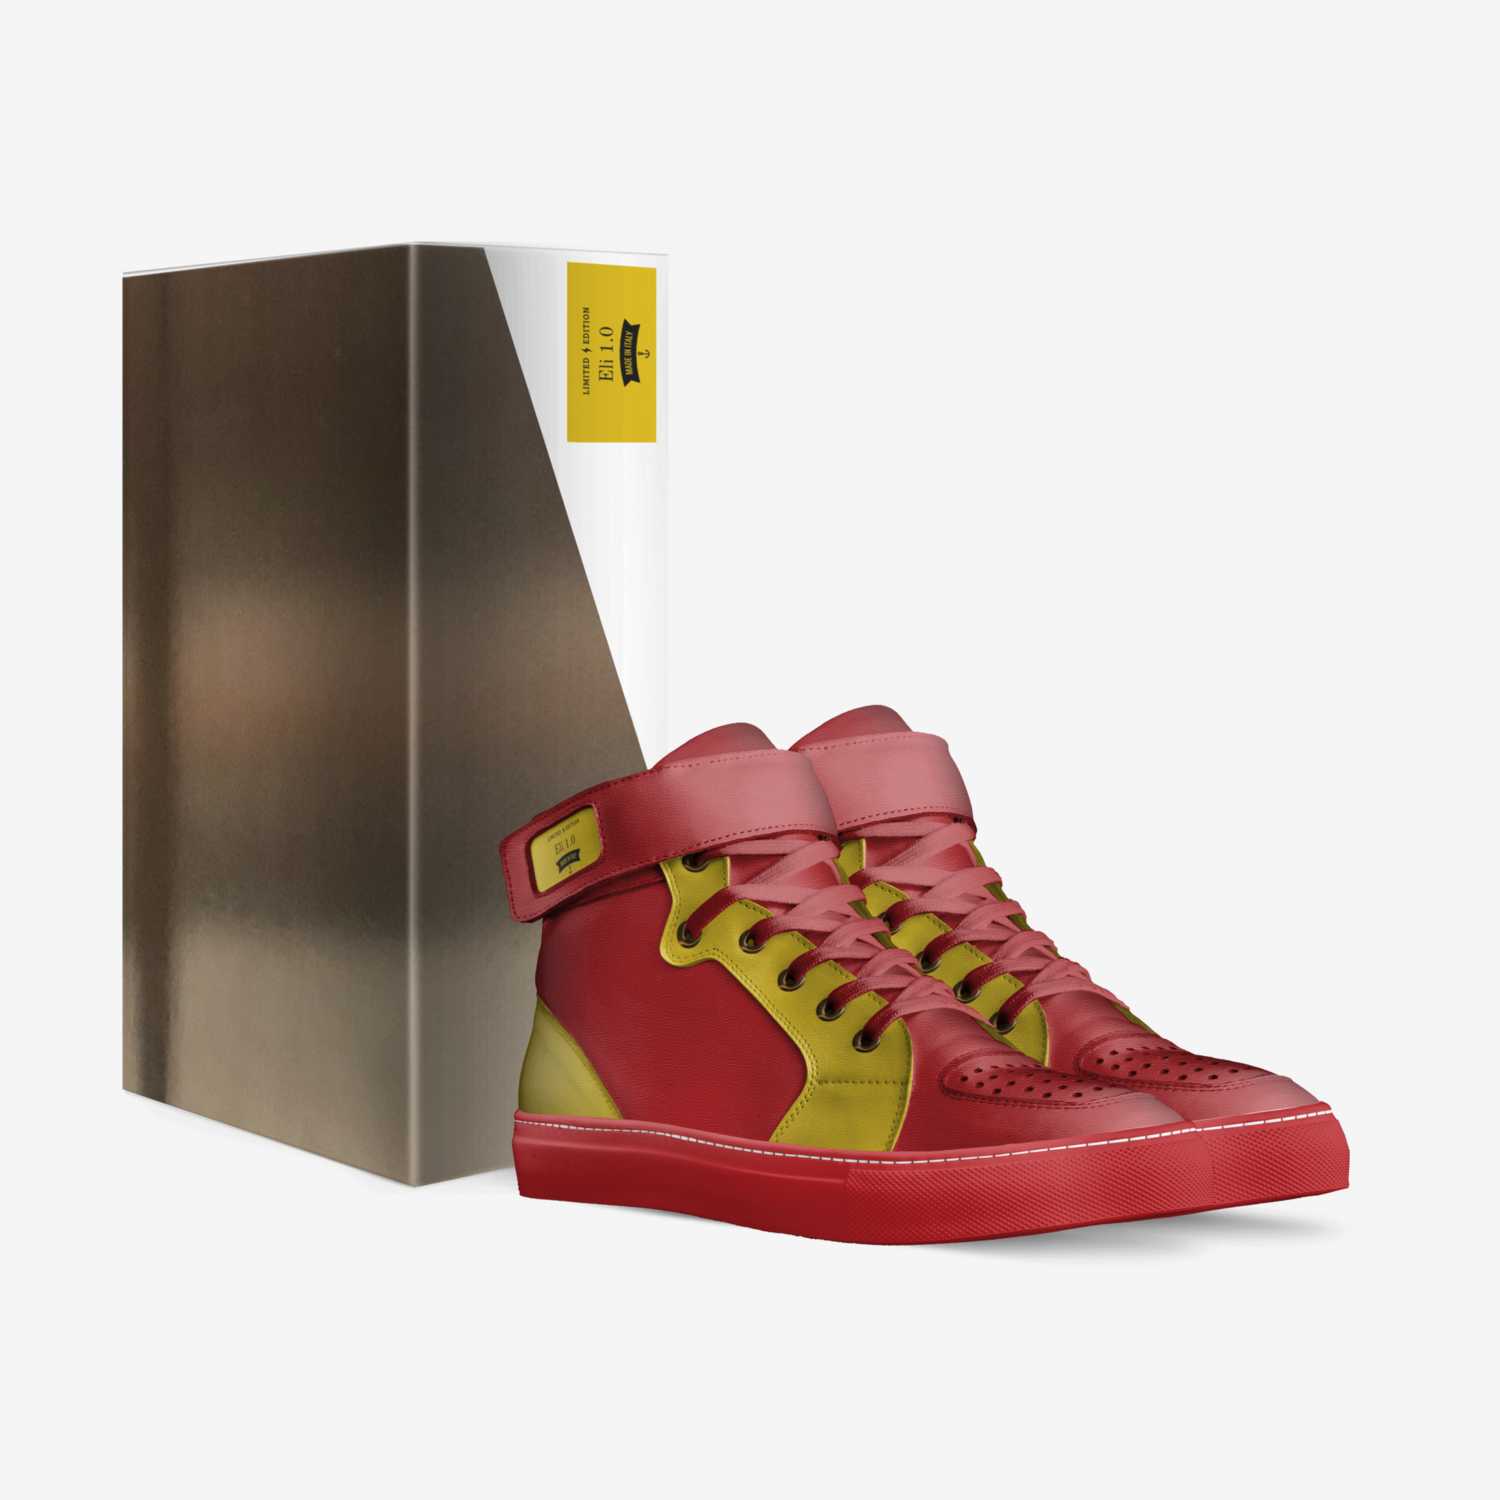 Eli 1.0 custom made in Italy shoes by Elias Avery Crea | Box view